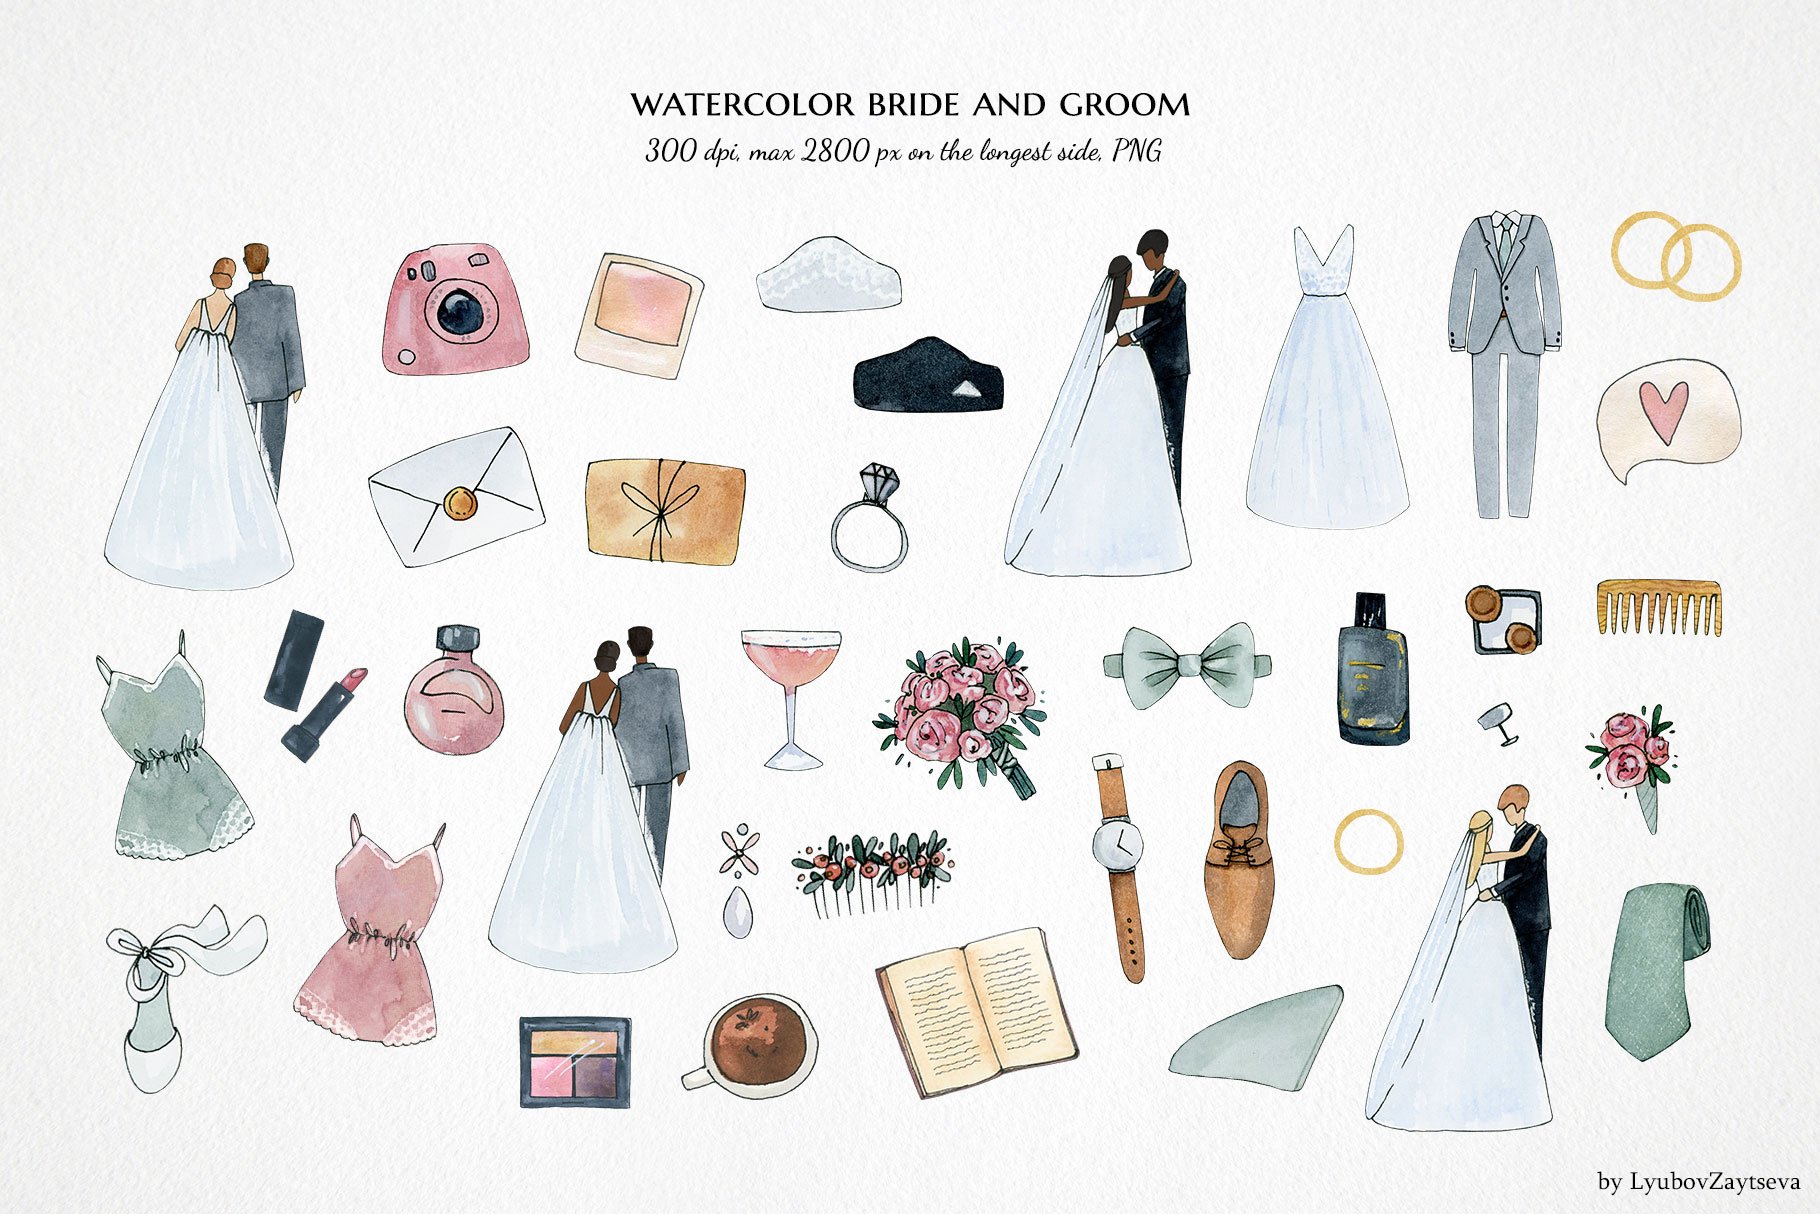 watercolor wedding bride clipart preview image.